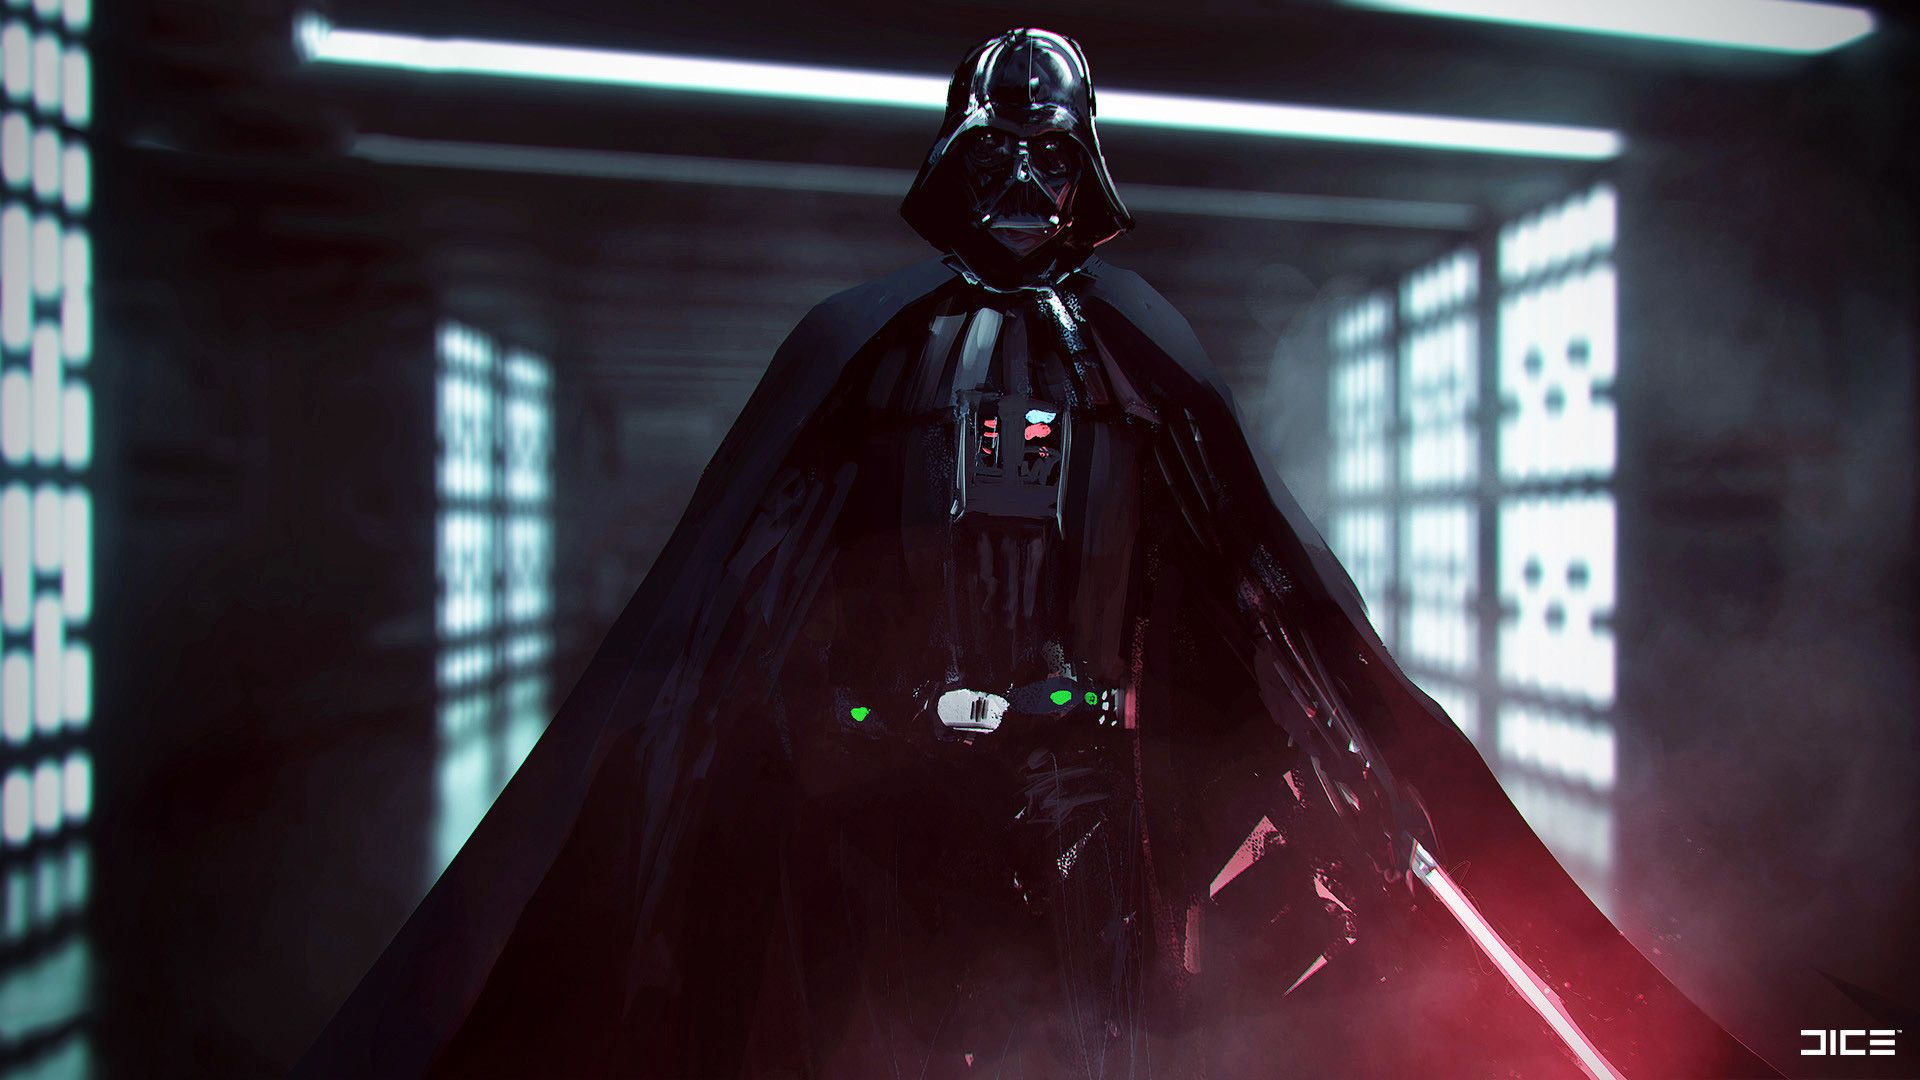 Darth Vader Star Wars Battlefront 2 Concept Art, HD Games, 4k Wallpaper, Image, Background, Photo and Picture